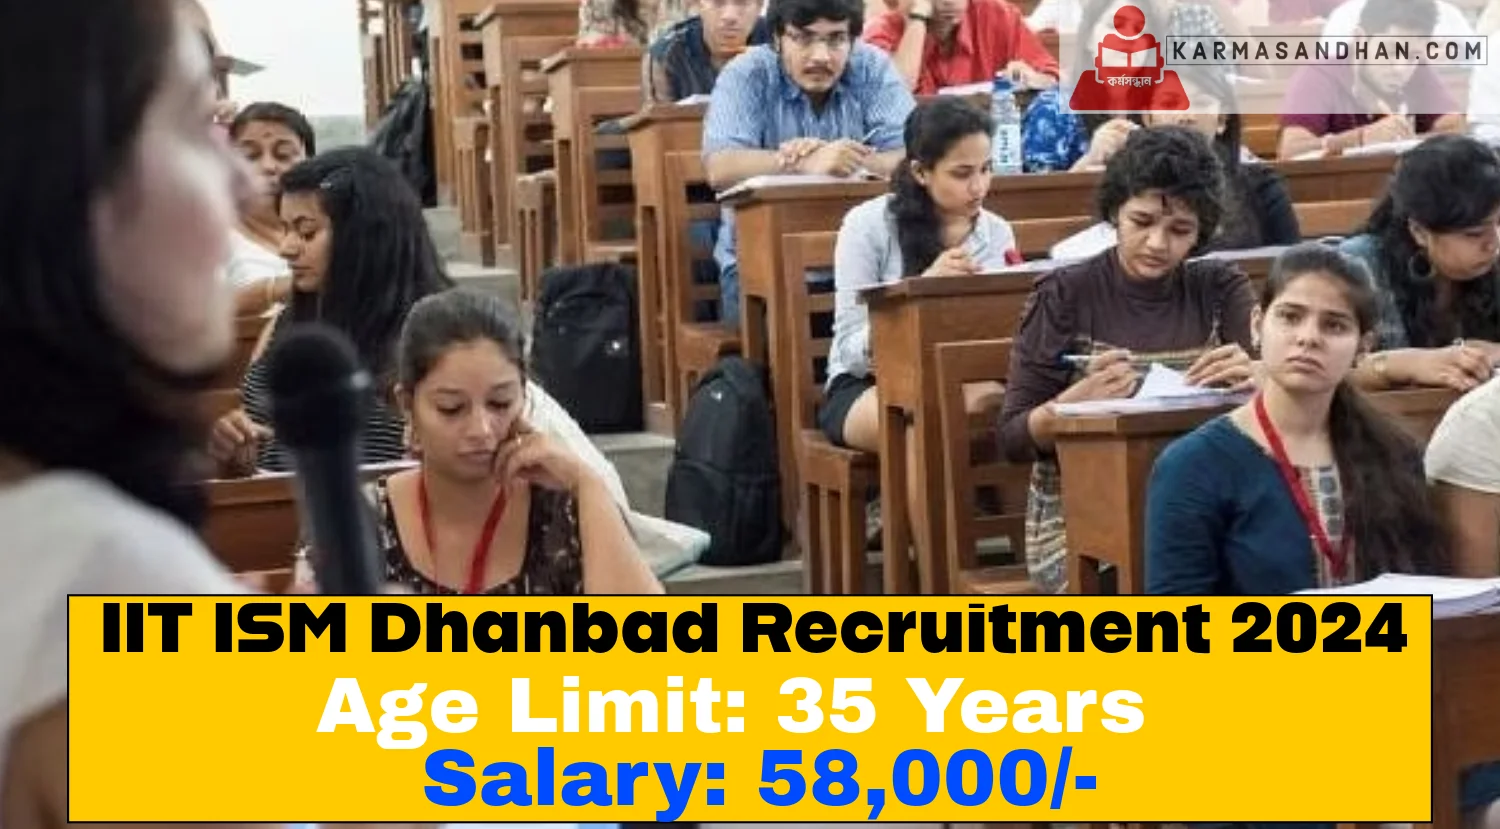 IIT ISM Dhanbad Recruitment 2024